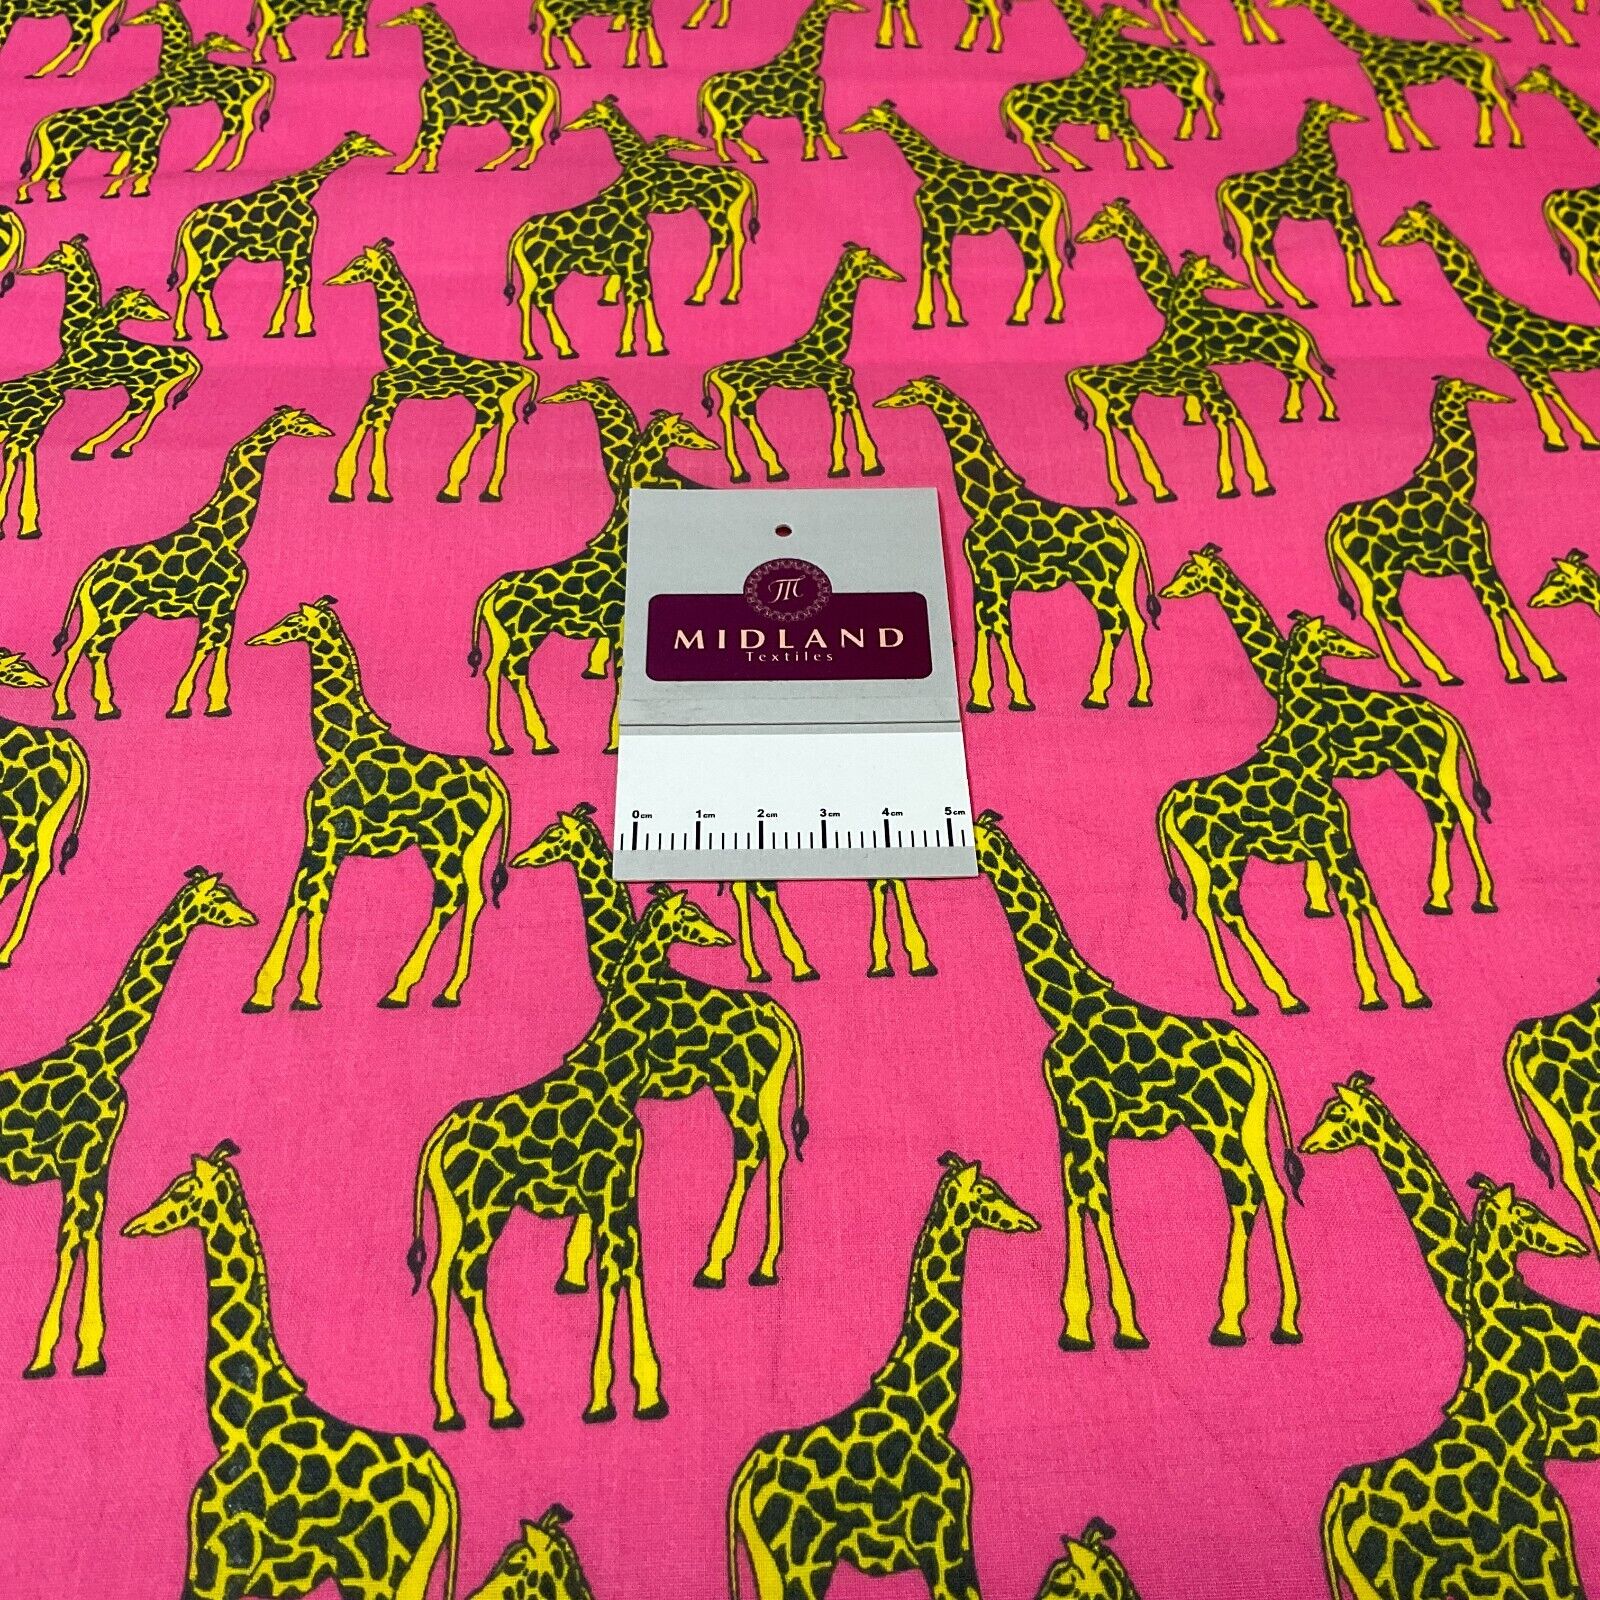 Giraffe Animals  Poly cotton printed fabric 110cm Wide M1706